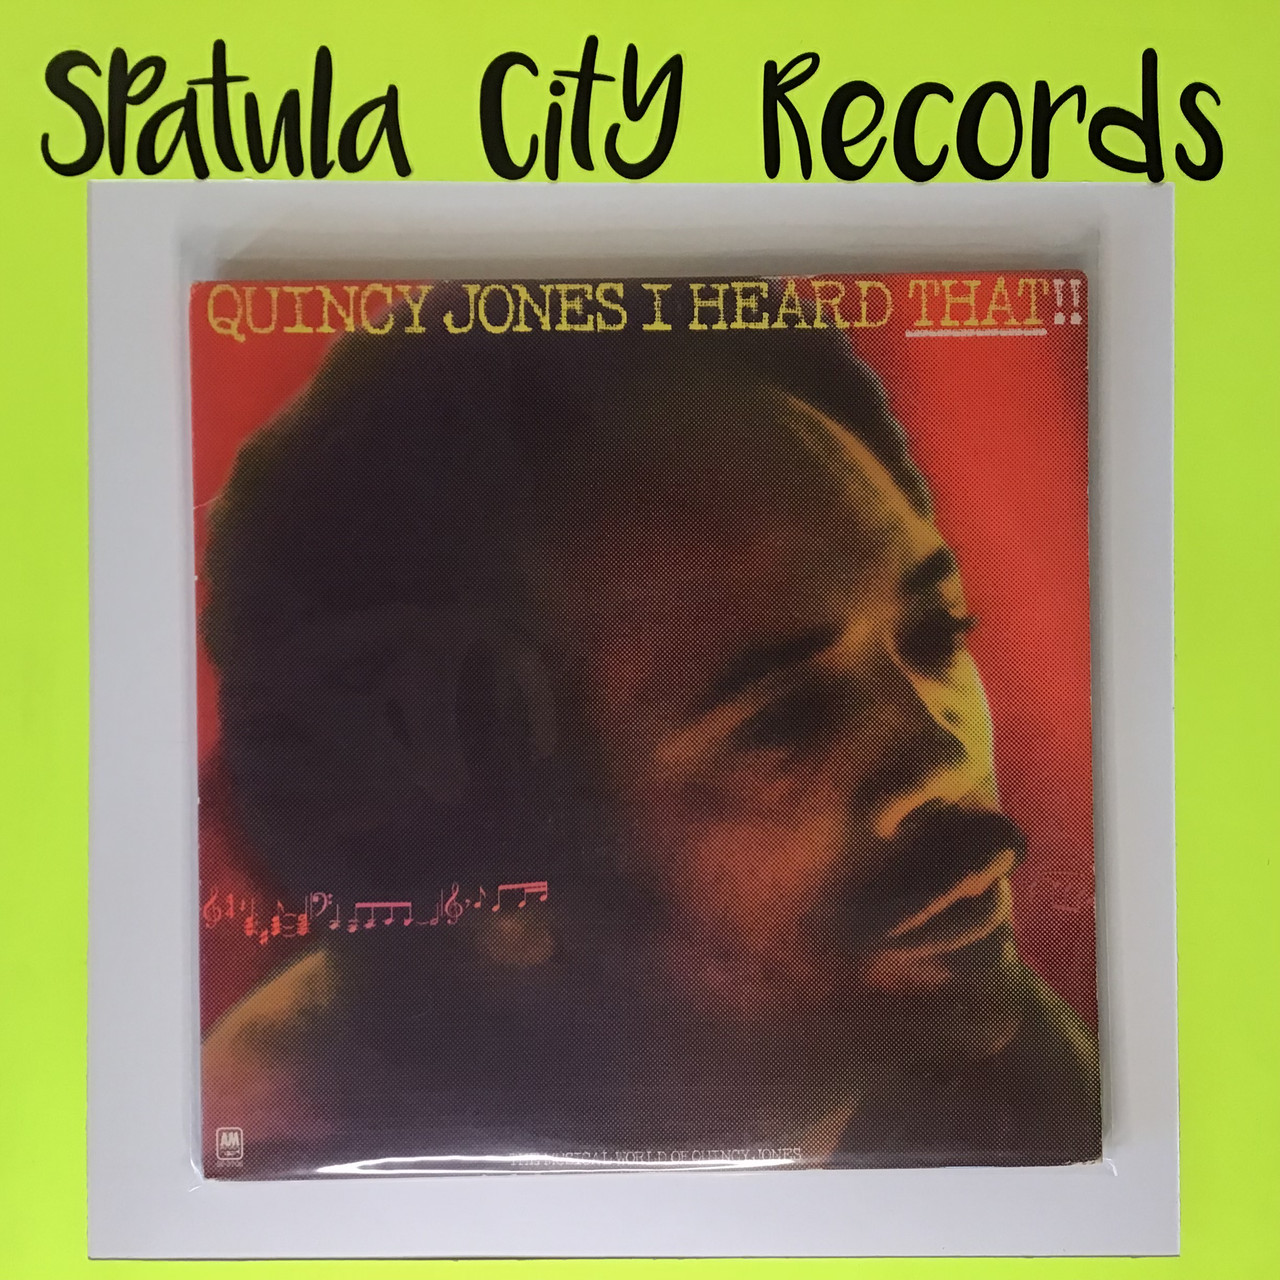 Quincy Jones - I heard that - double vinyl record album LP